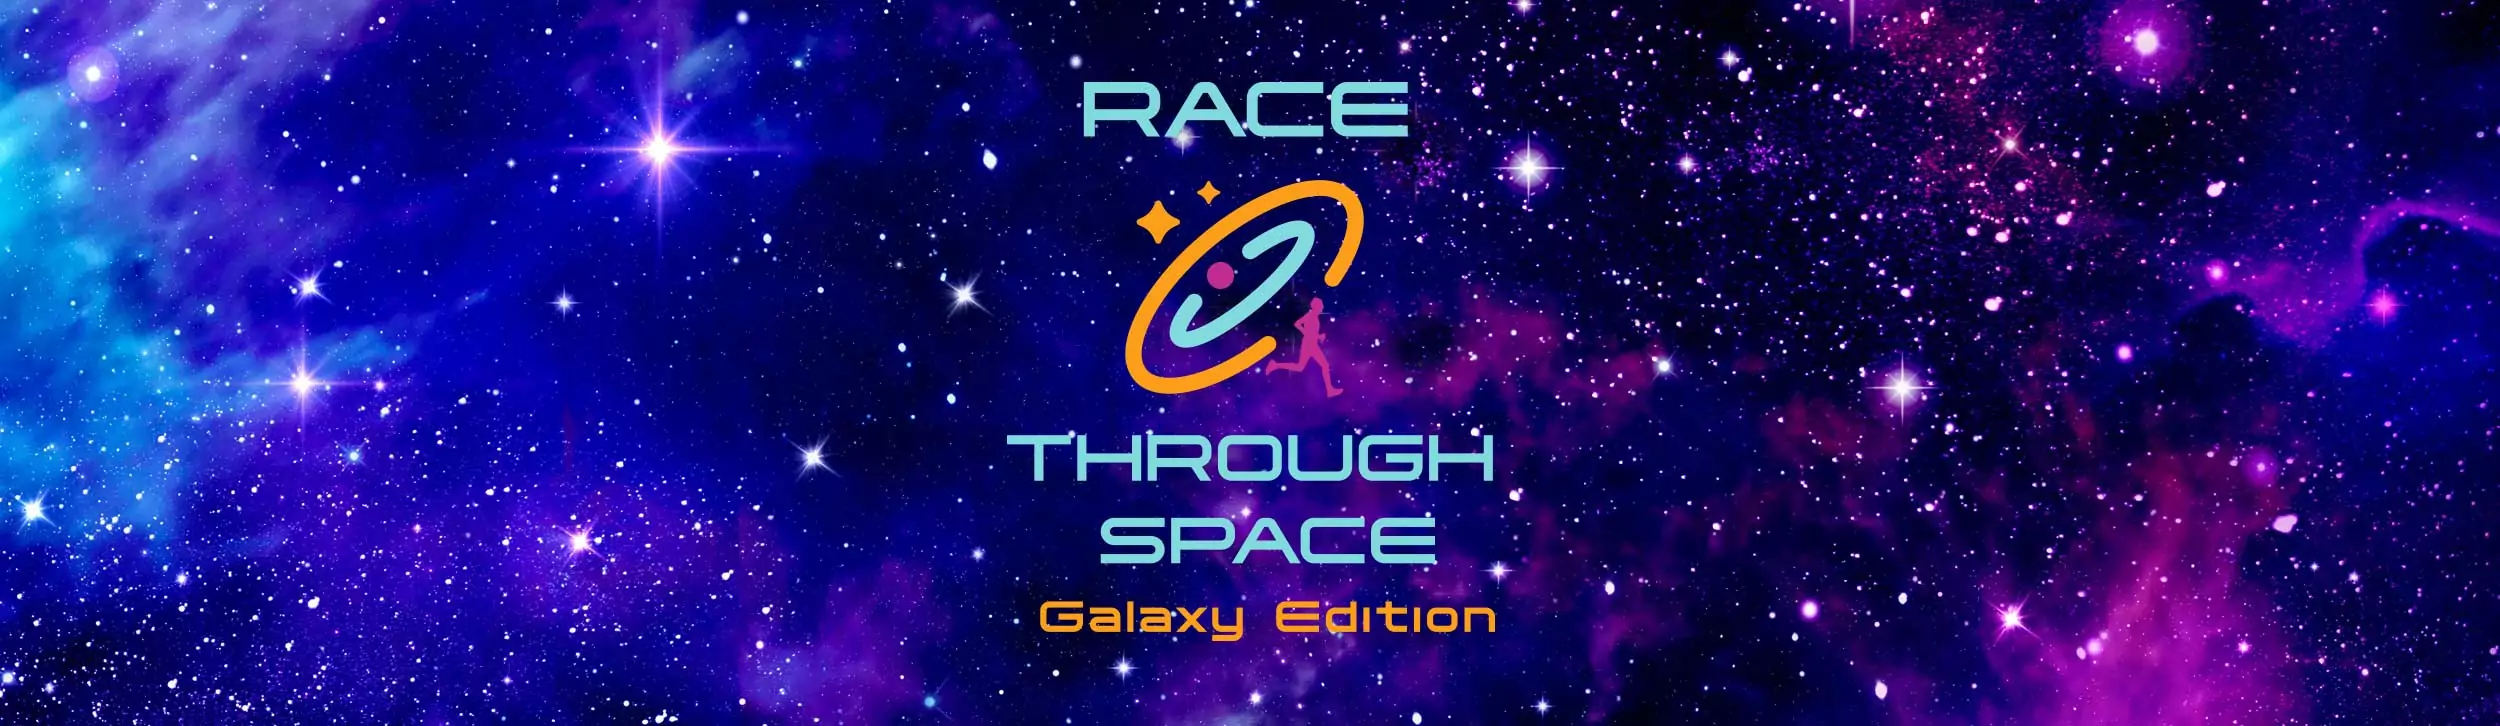 Race Through Space Galaxy Edition